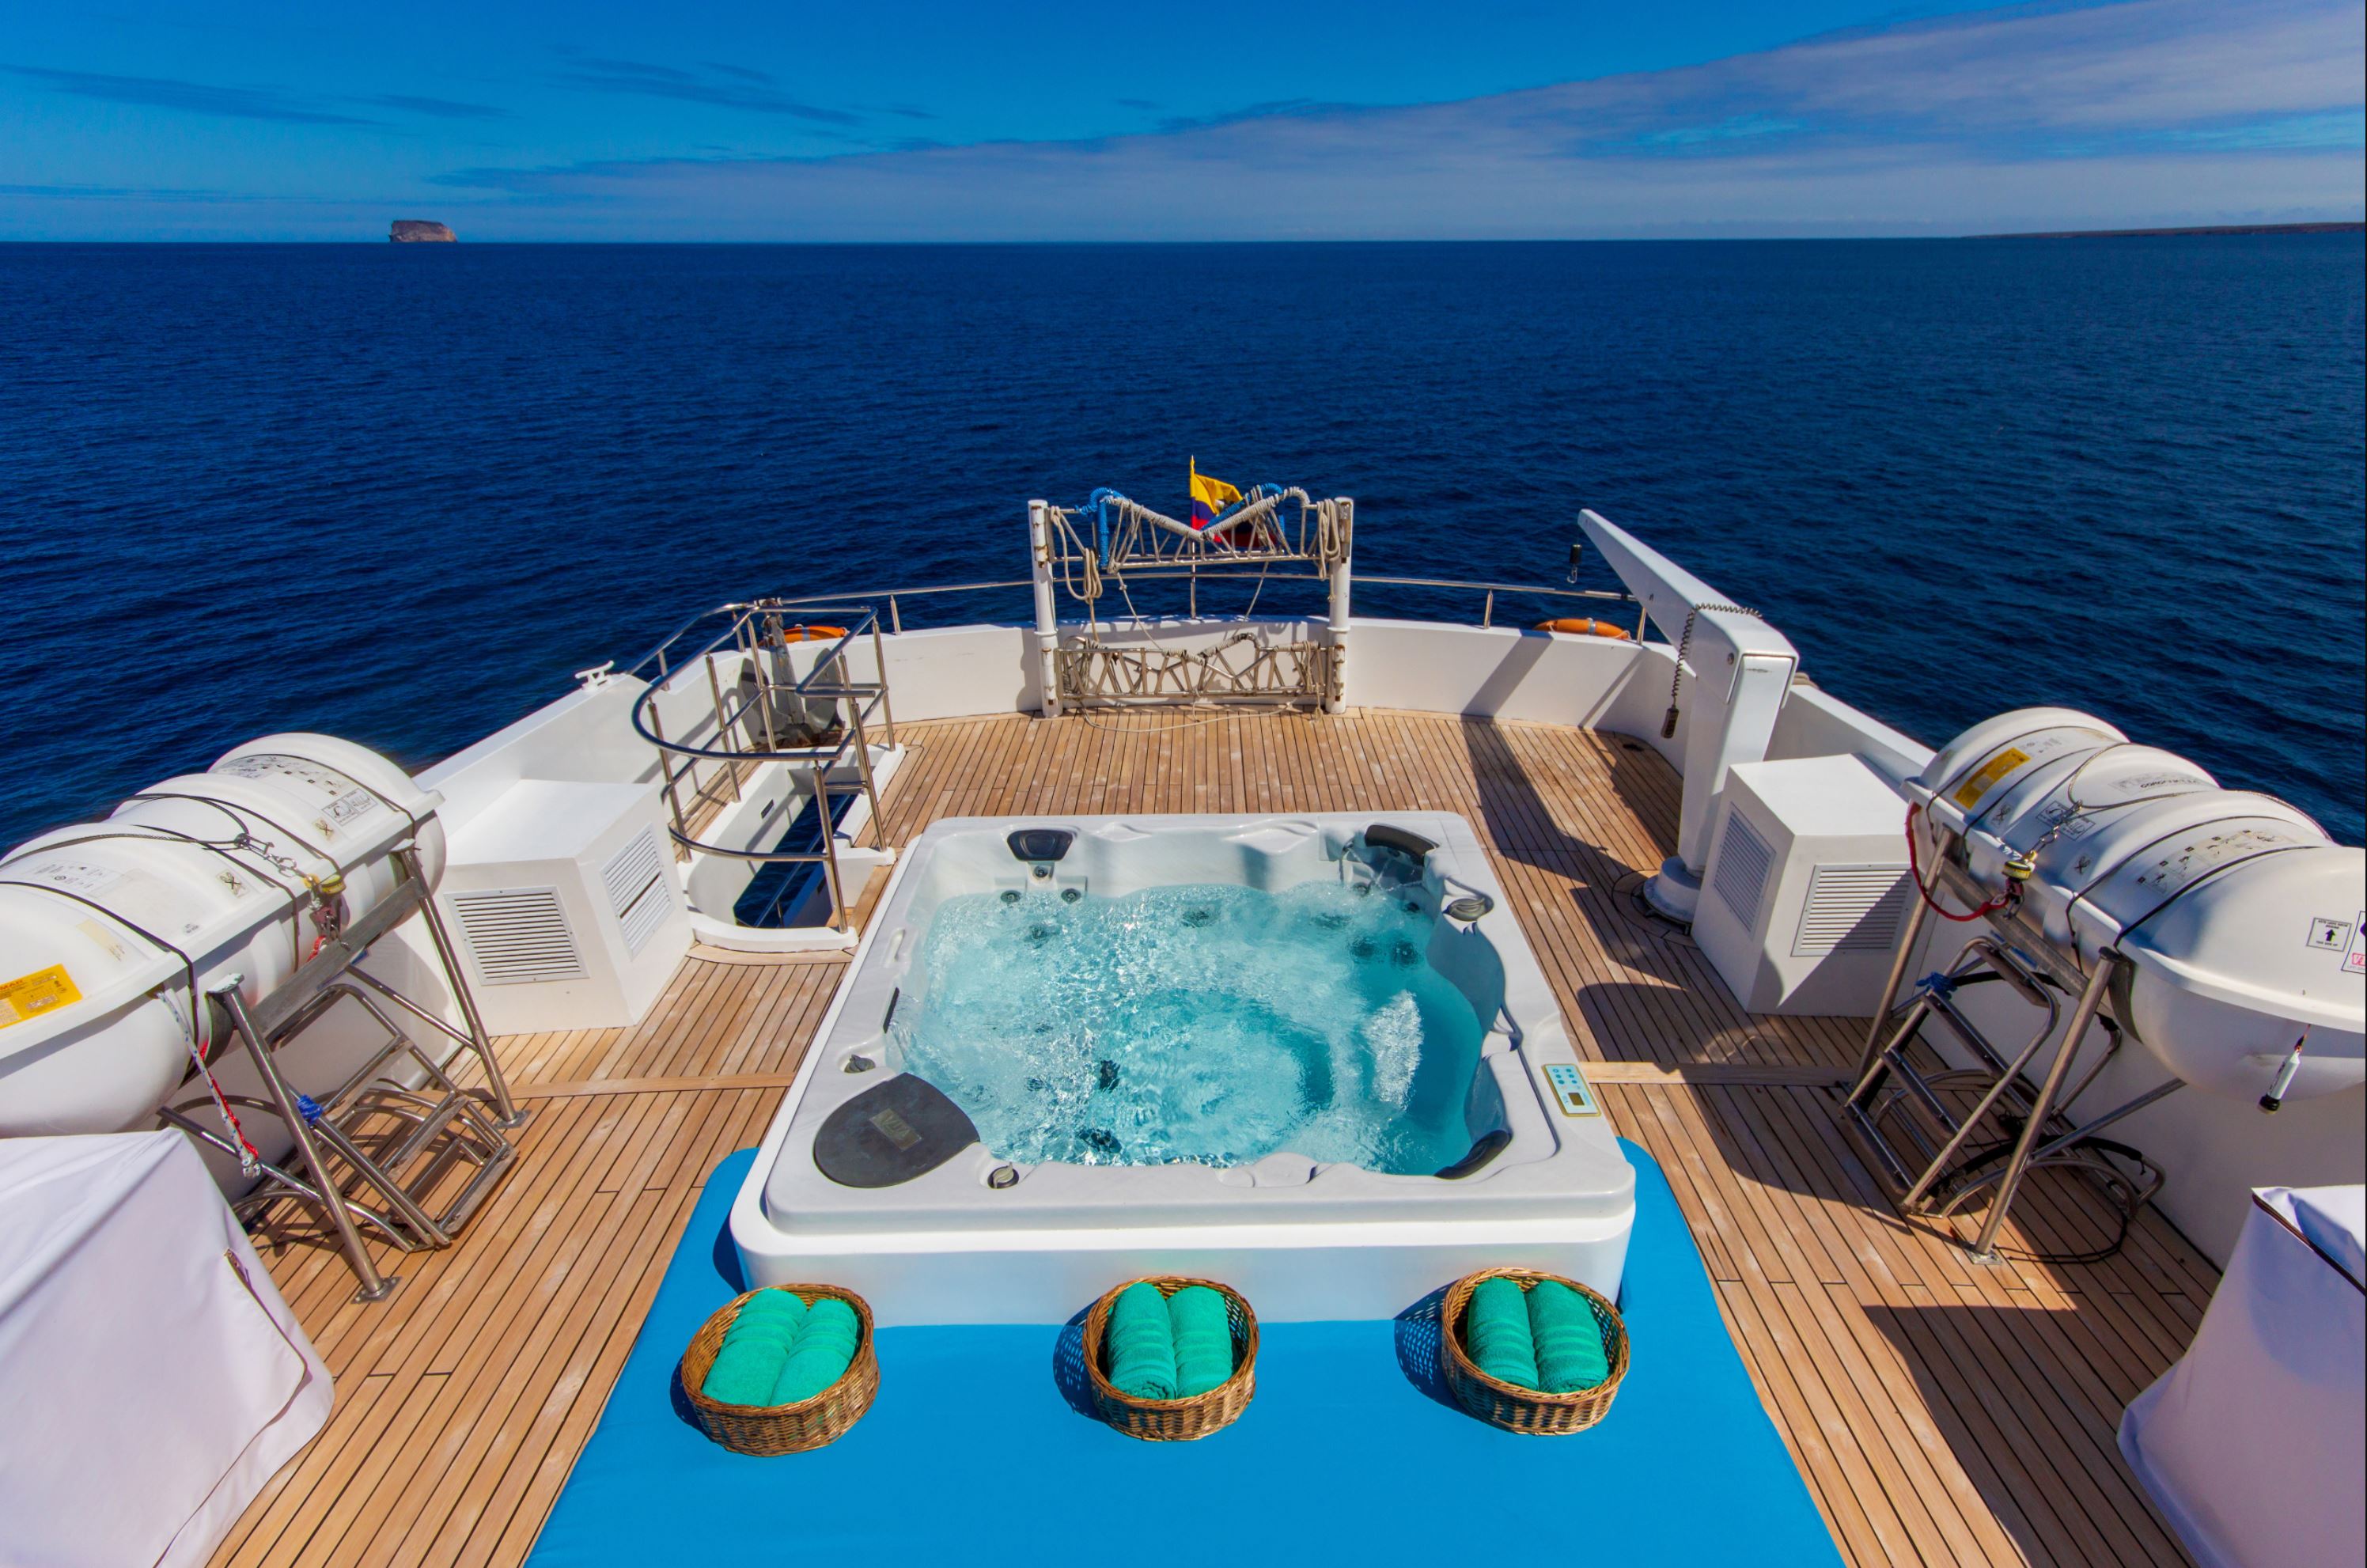 Galapagos Gran Majestic Luxury Yacht: Galapagos Gran Majestic Luxusyacht 5 Tage/4 Nächte Kreuzfahrt